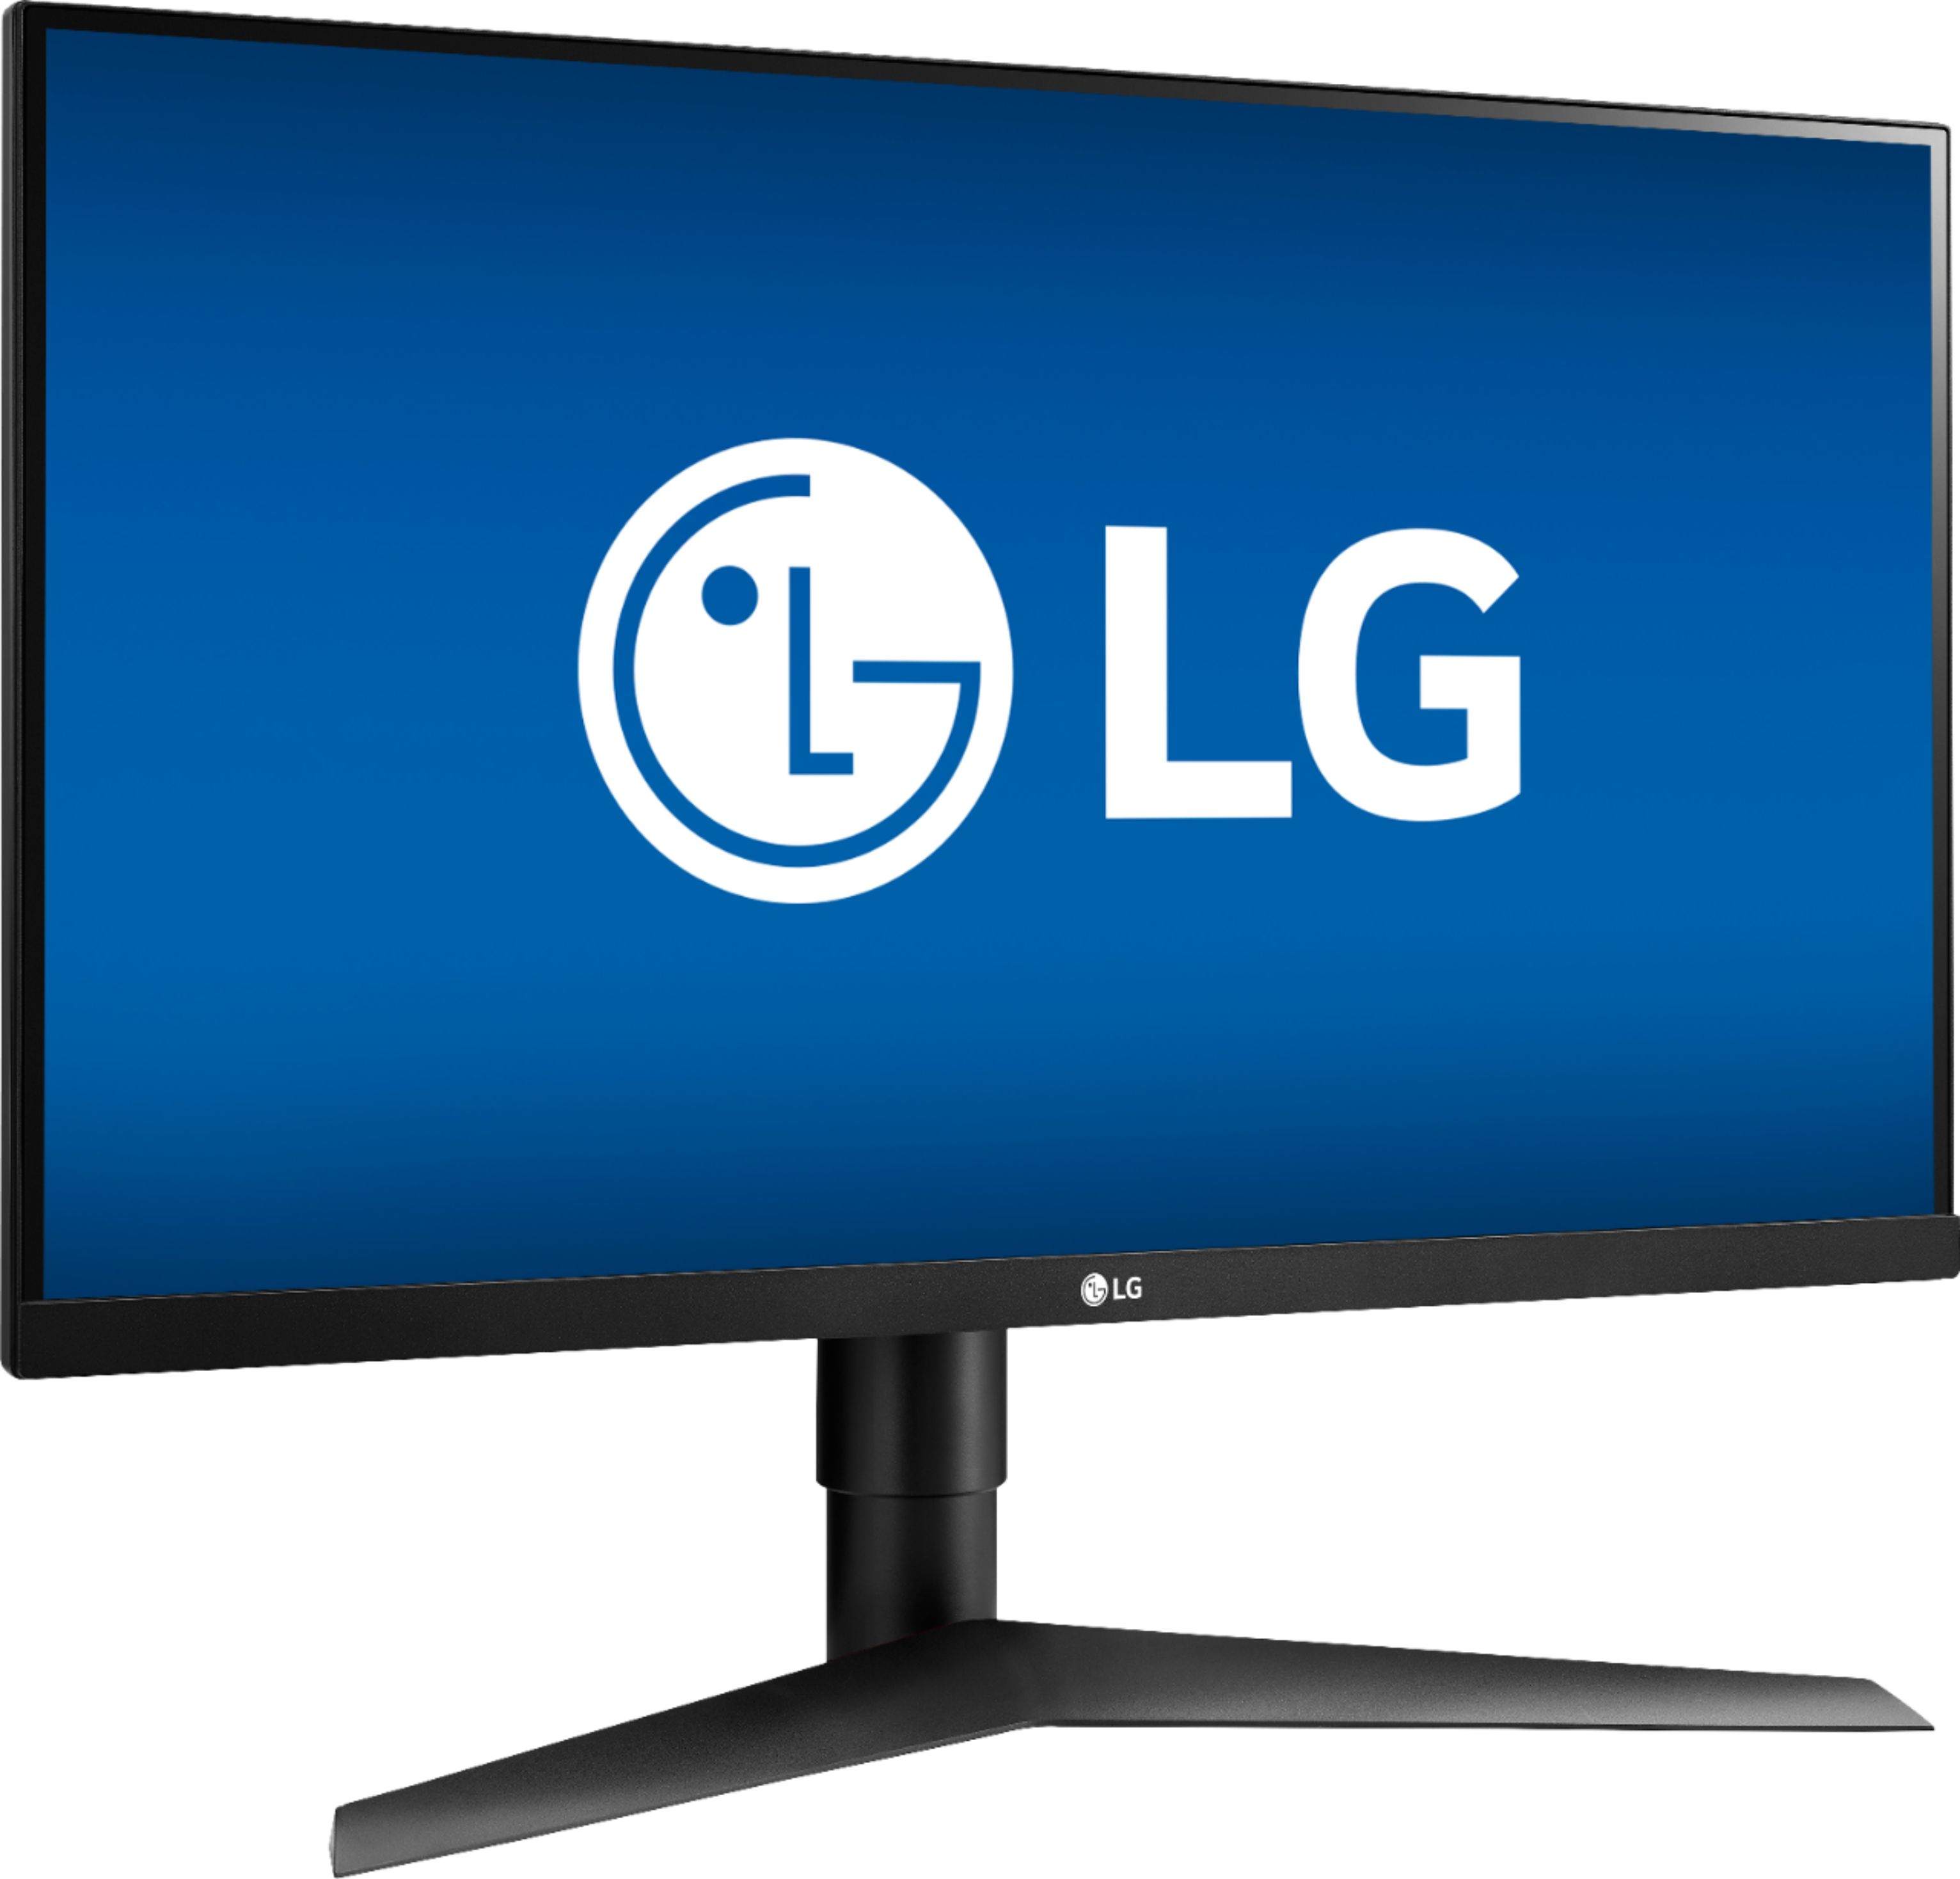 Angle View: LG - Geek Squad Certified Refurbished 24" IPS LED 4K UHD FreeSync Monitor - Black